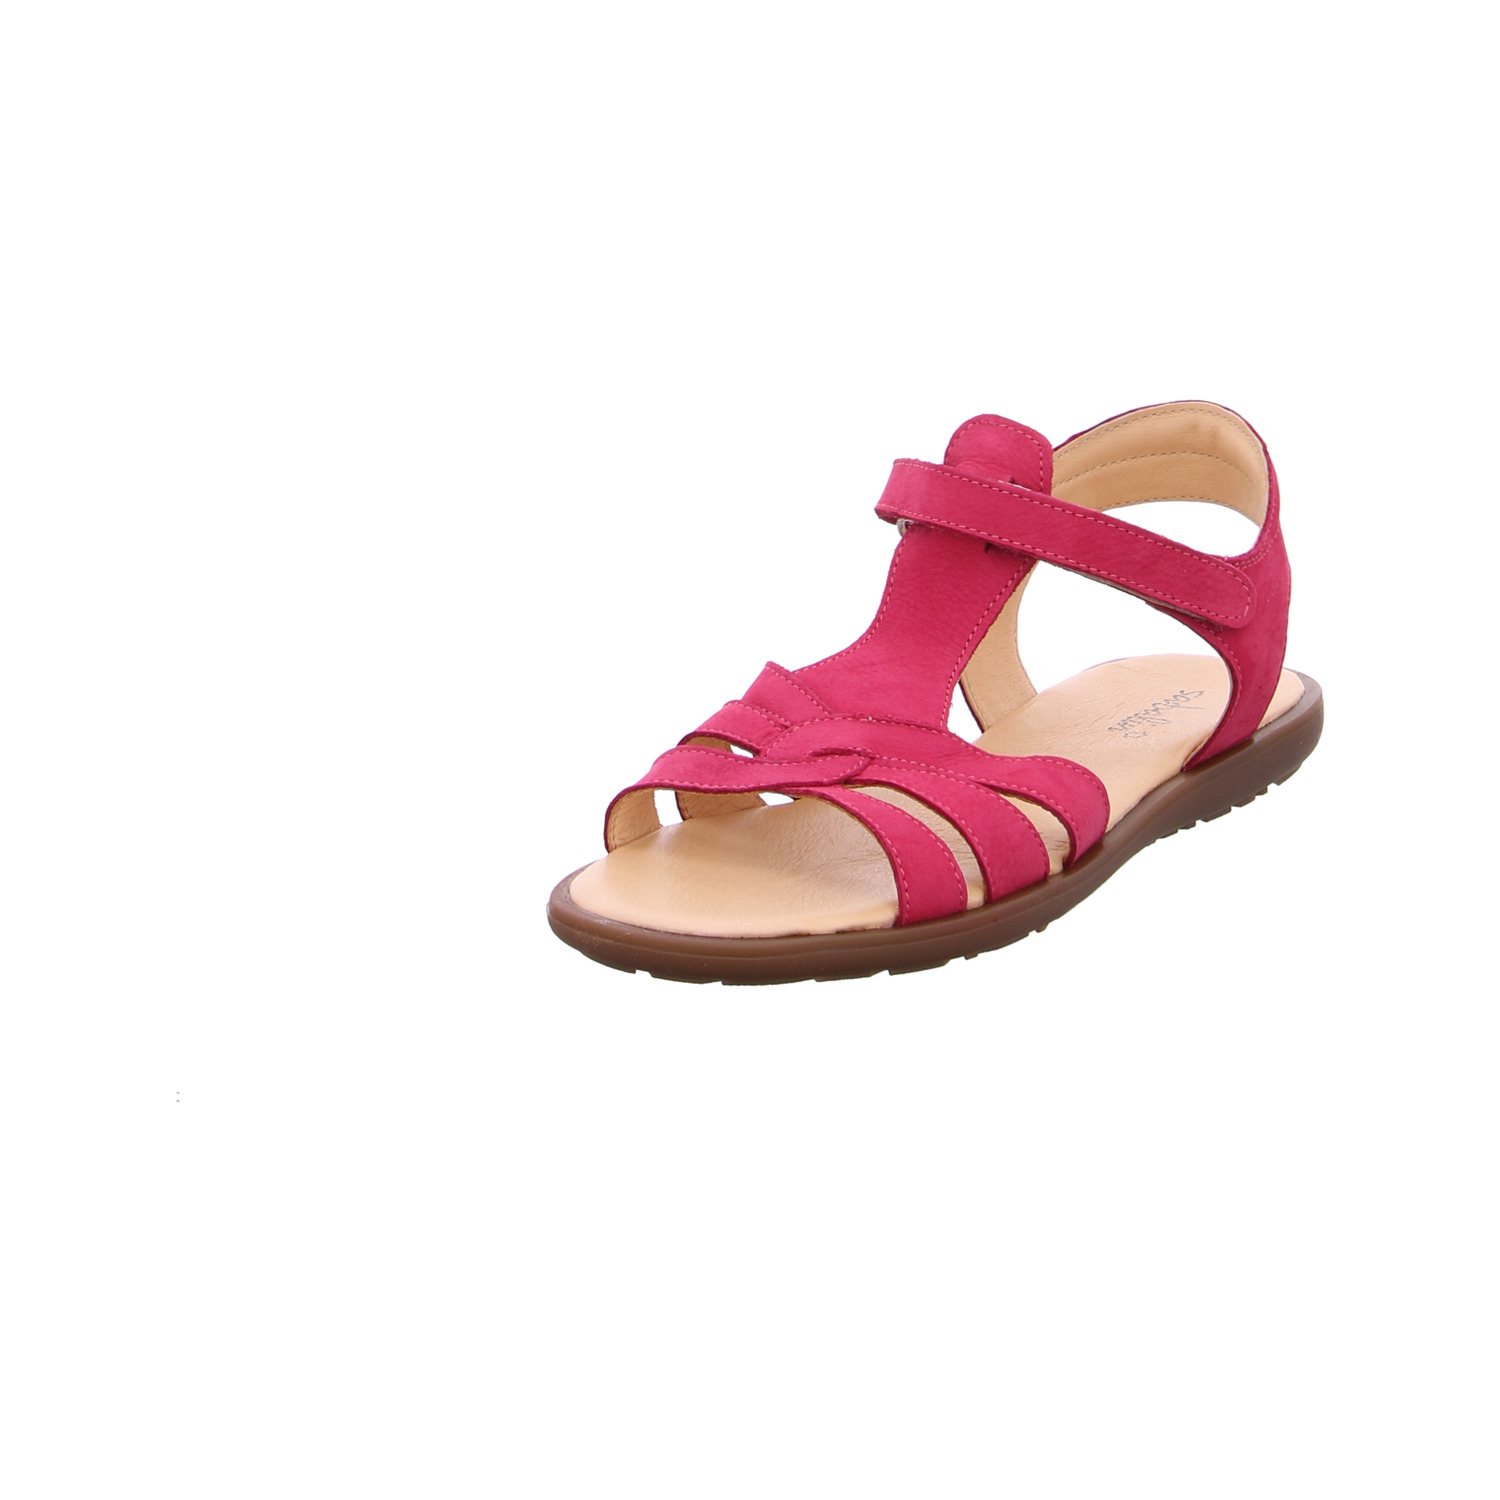 sabalin-kinder-sandaletten-mädchen-rosa-119881-31